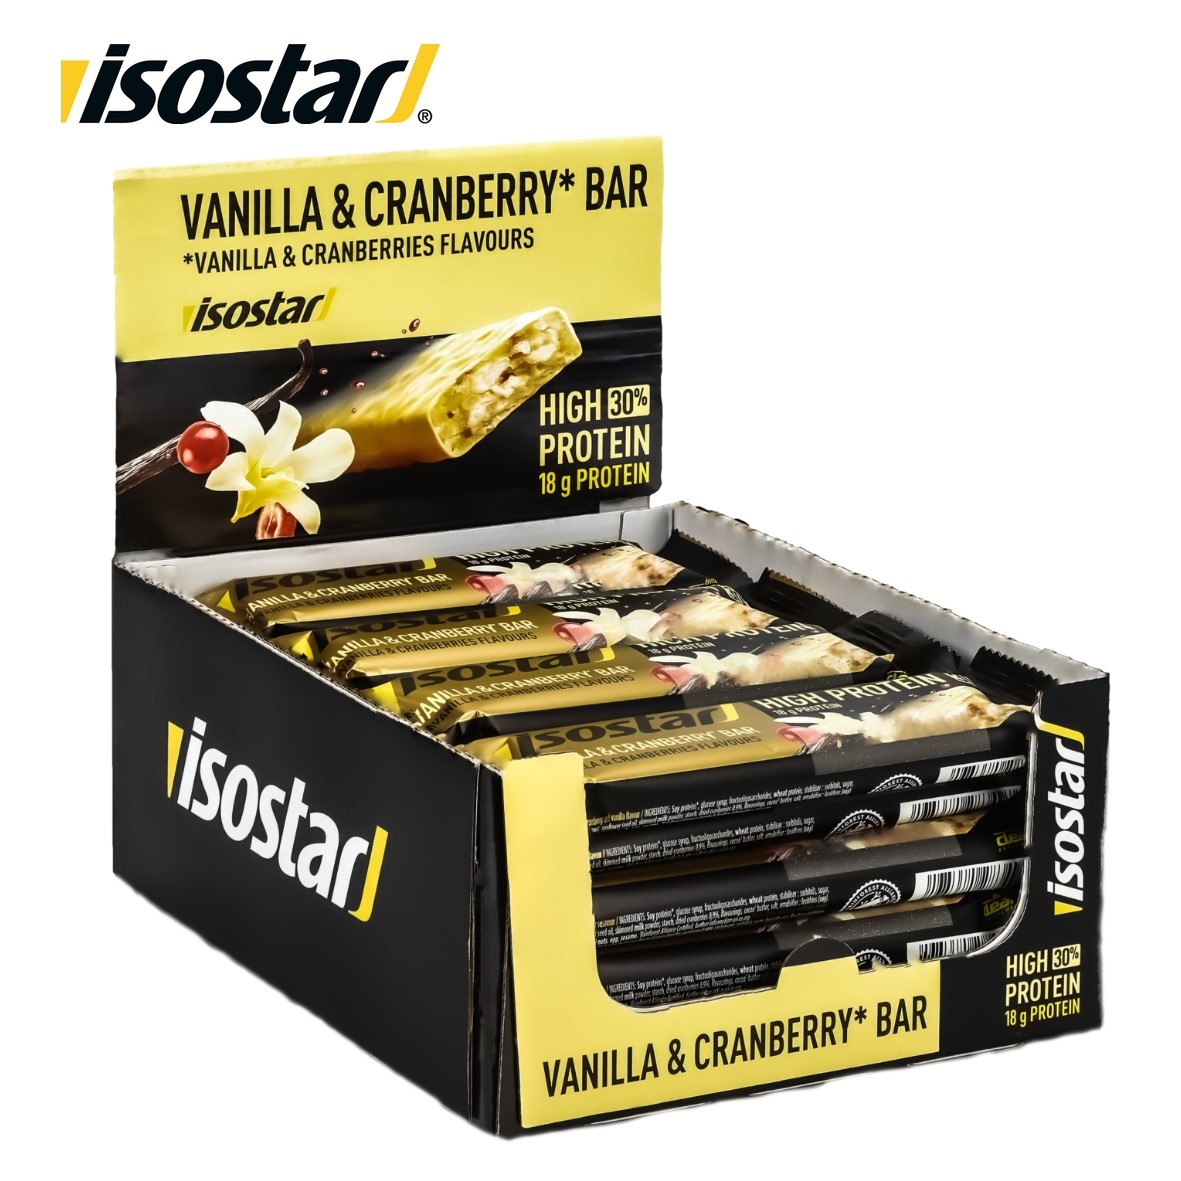 Isostar 30% High Protein Bar (16 x 55g)